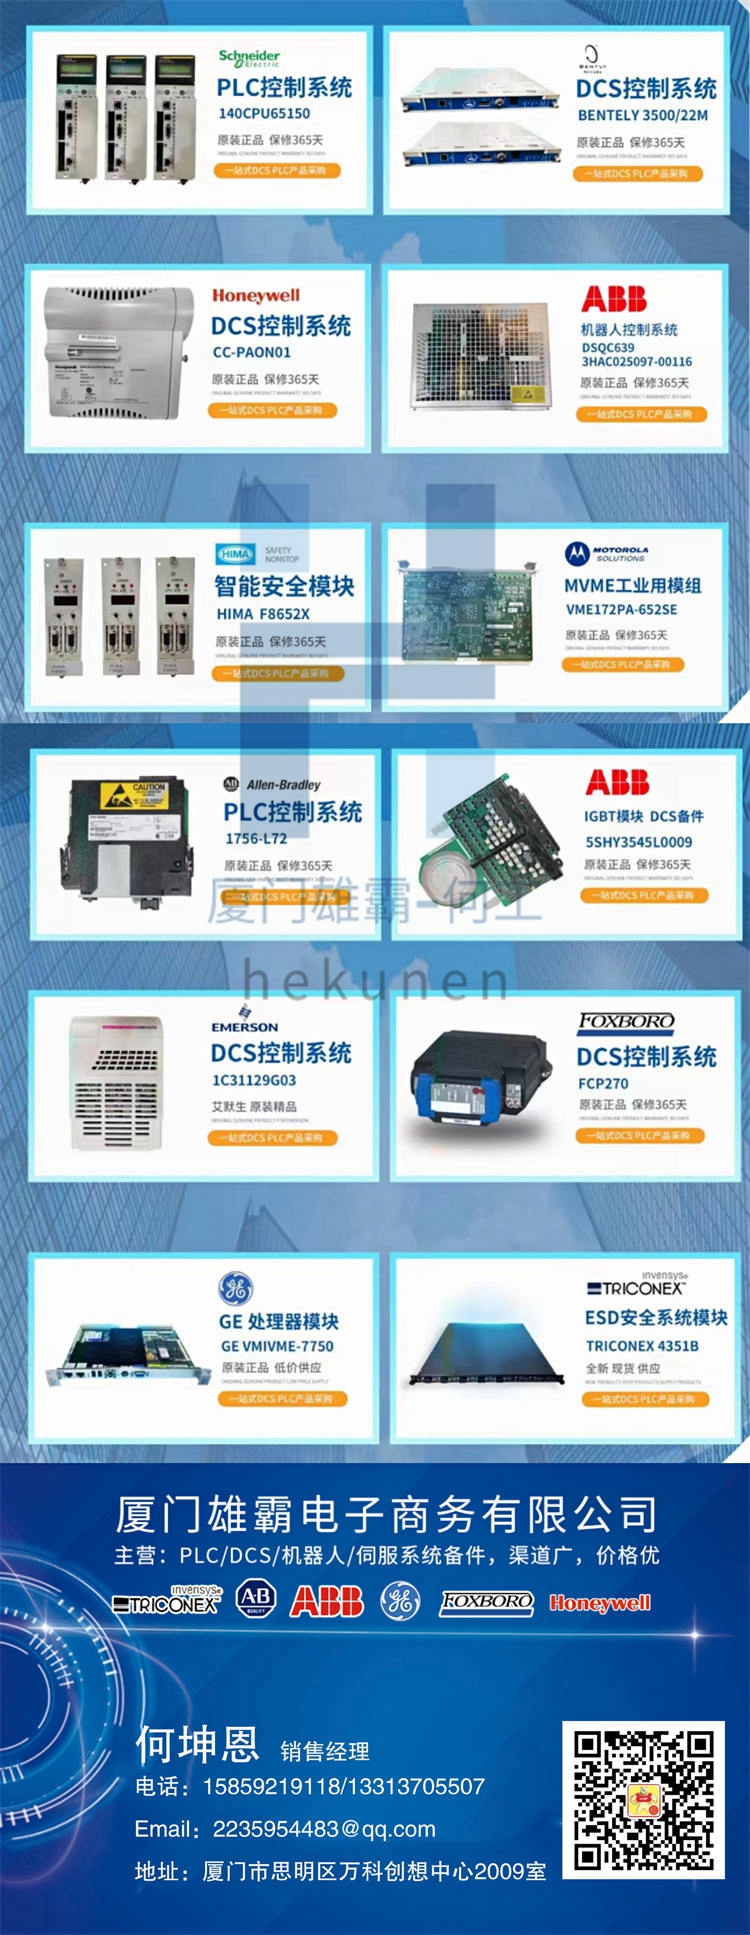 CI857K01 3BSE018144R1 PLC控制器ABB 输入输出模块-备件销售 